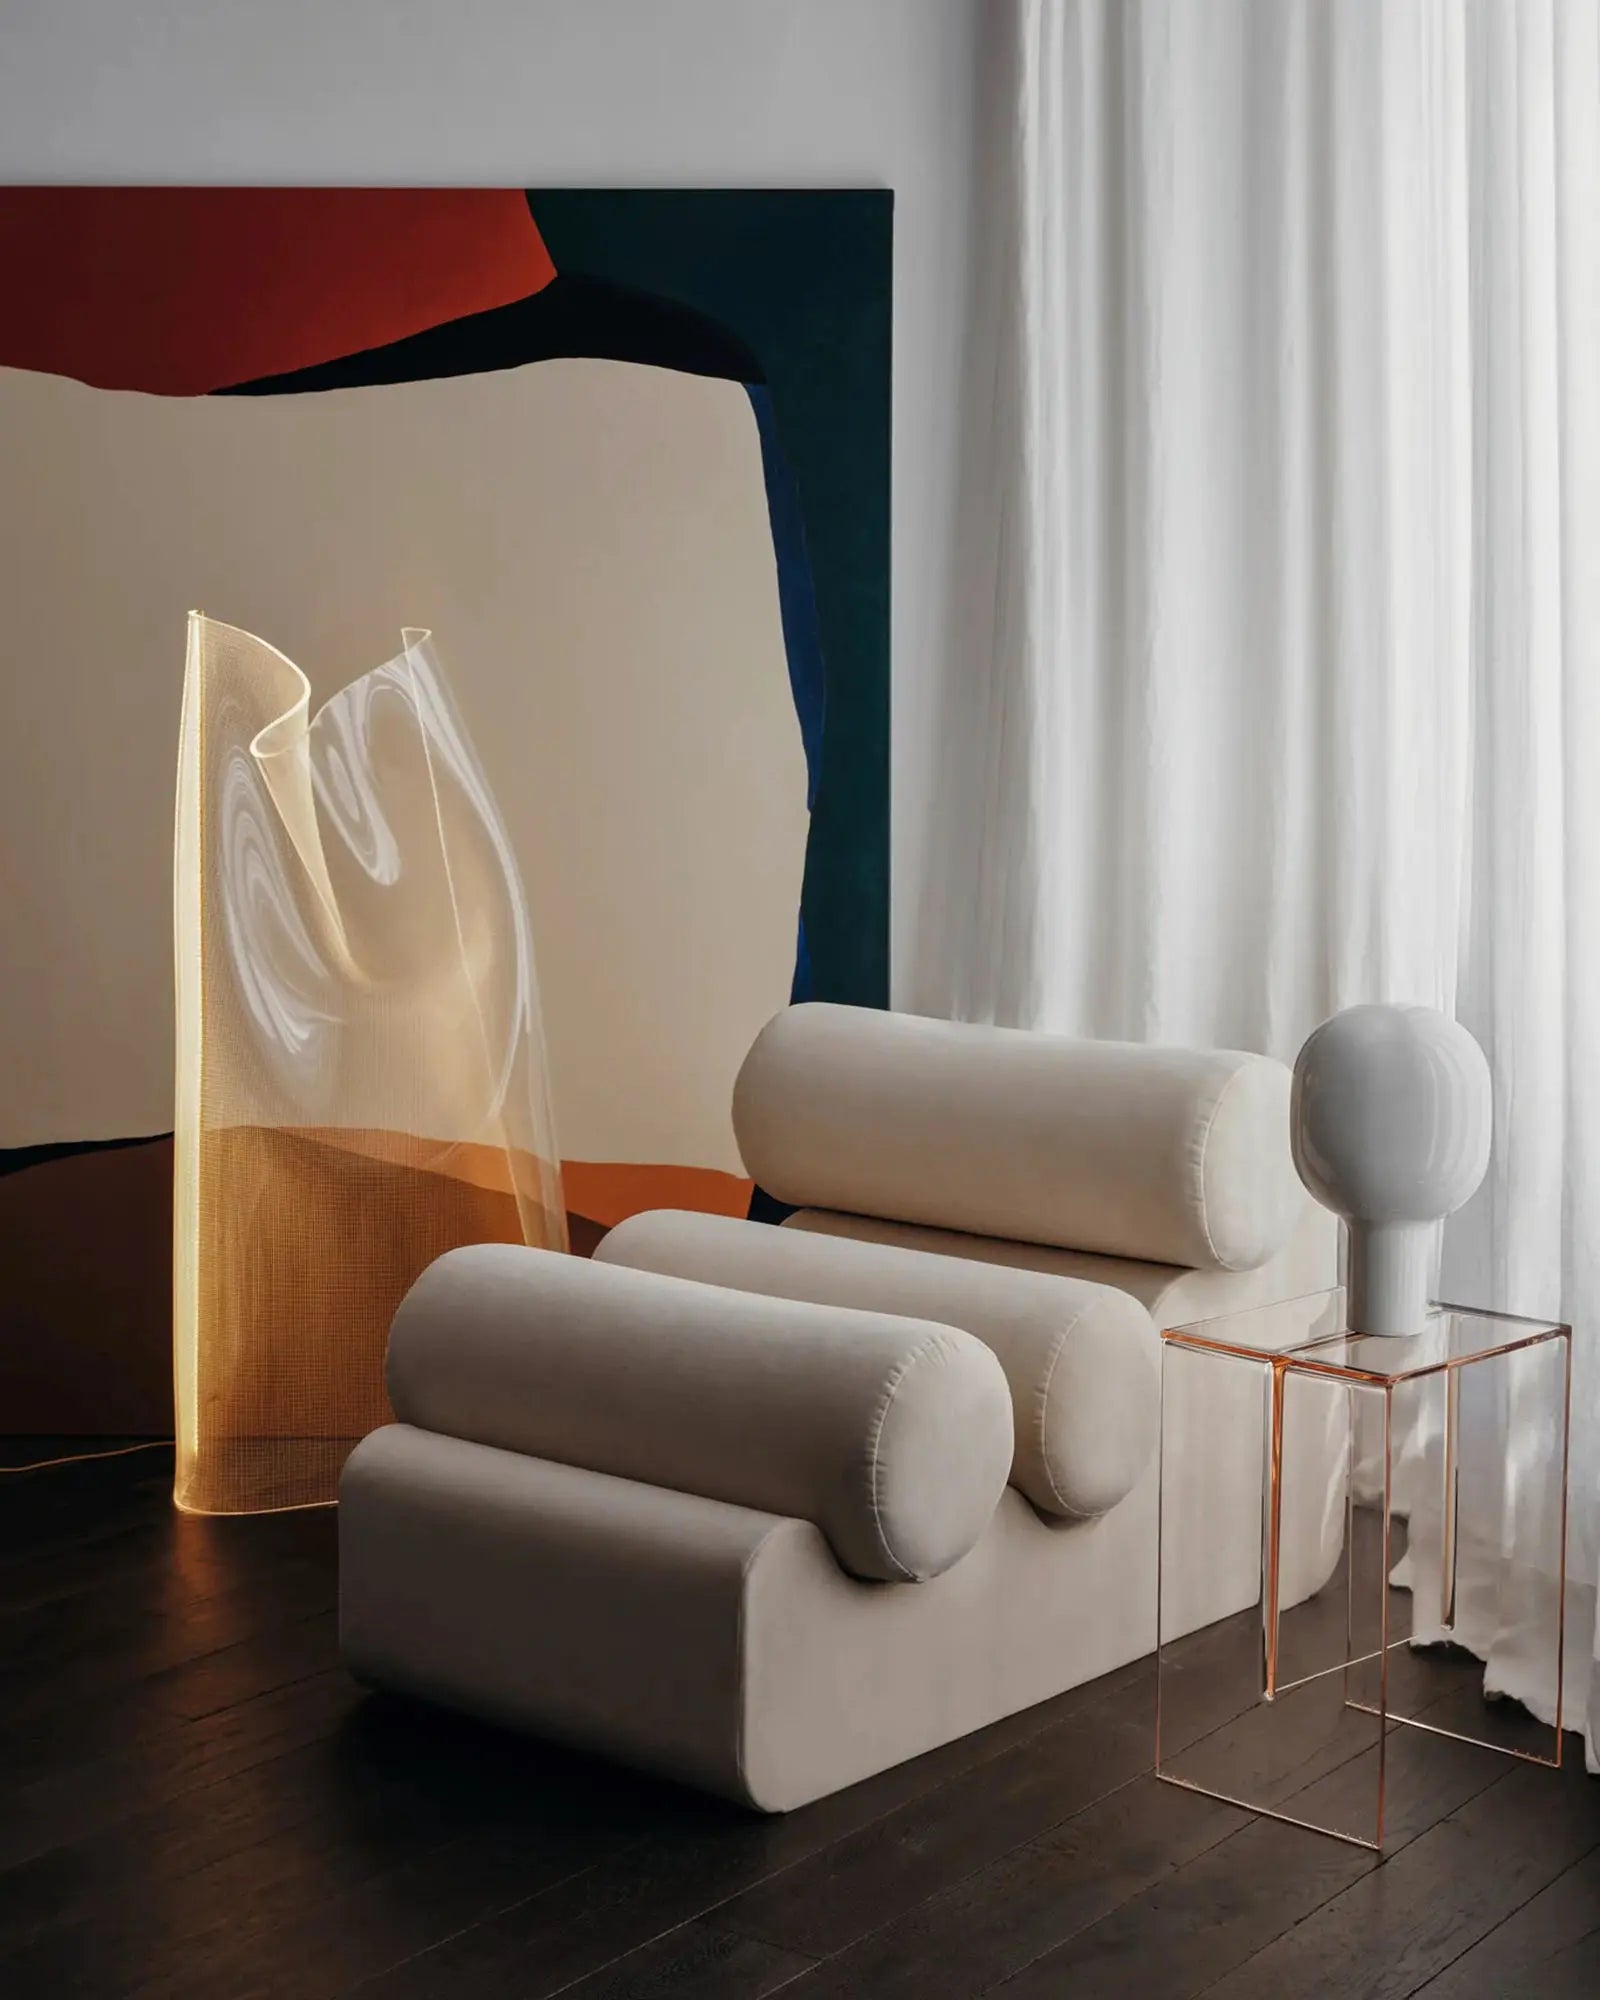 Gweilo Han decorative acrylic transparent floor lamp  in a lounge area